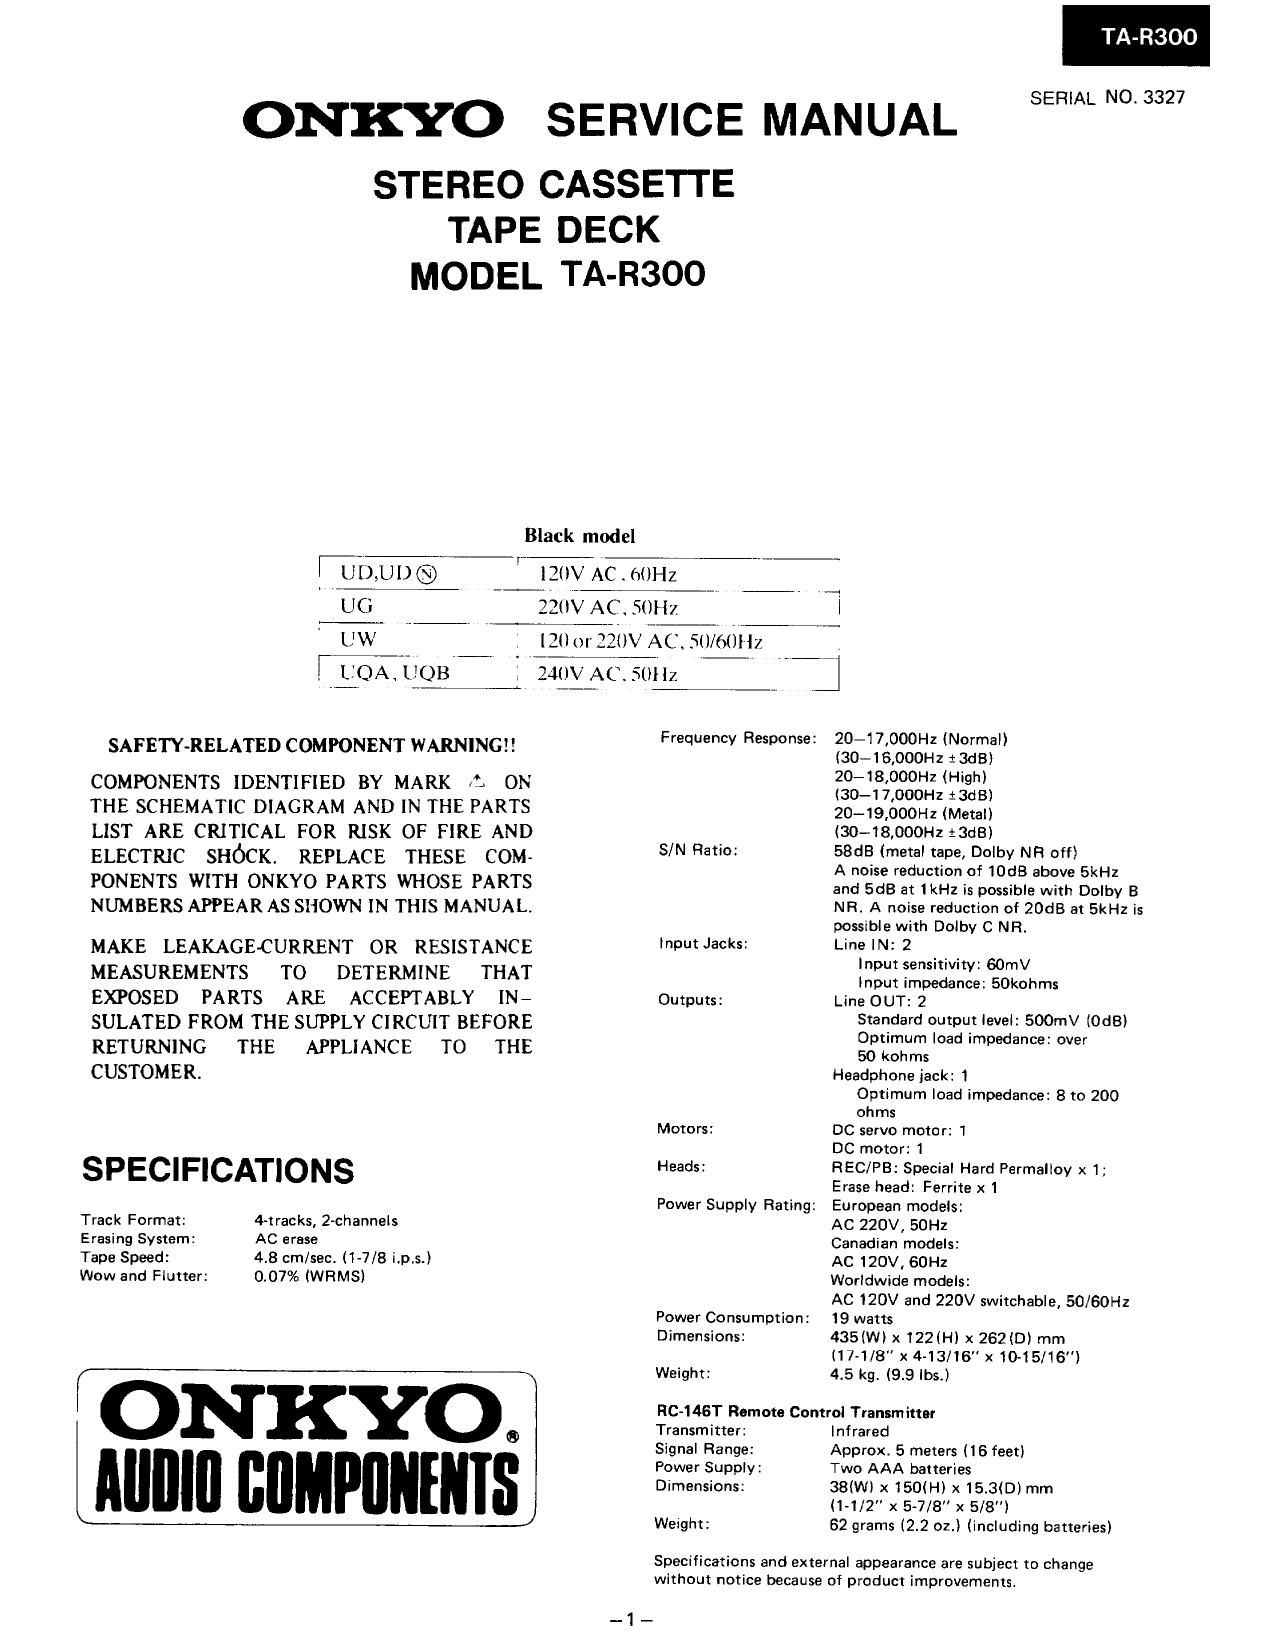 Onkyo TAR 300 Service Manual